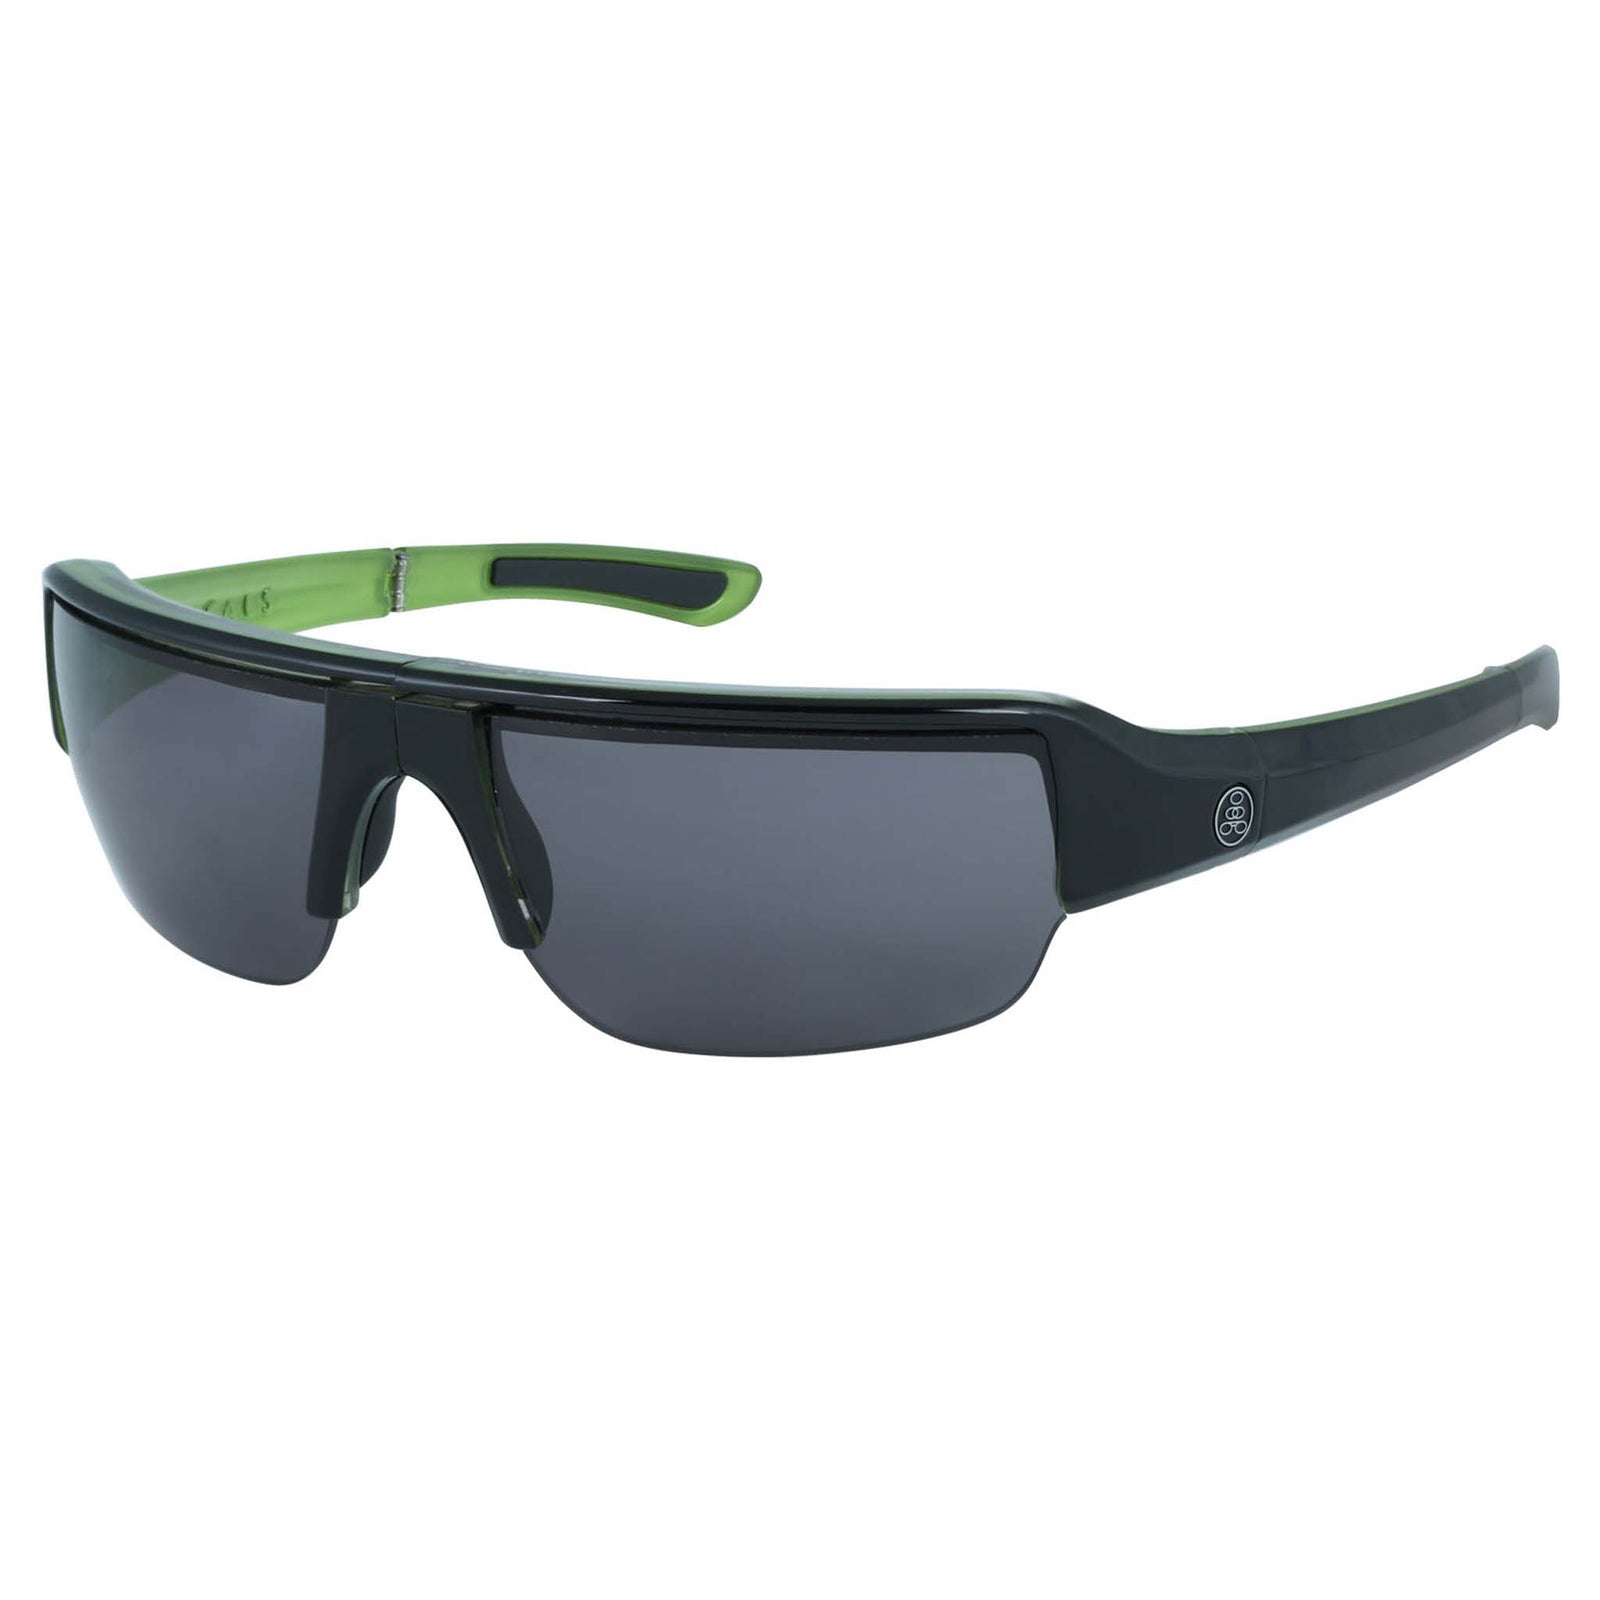 Popticals, Premium Compact Sunglasses, PopGun, 040010-GLGP, Polarized Sunglasses, Gloss Black over Green Crystal Frame, Gray Lenses, Glam View